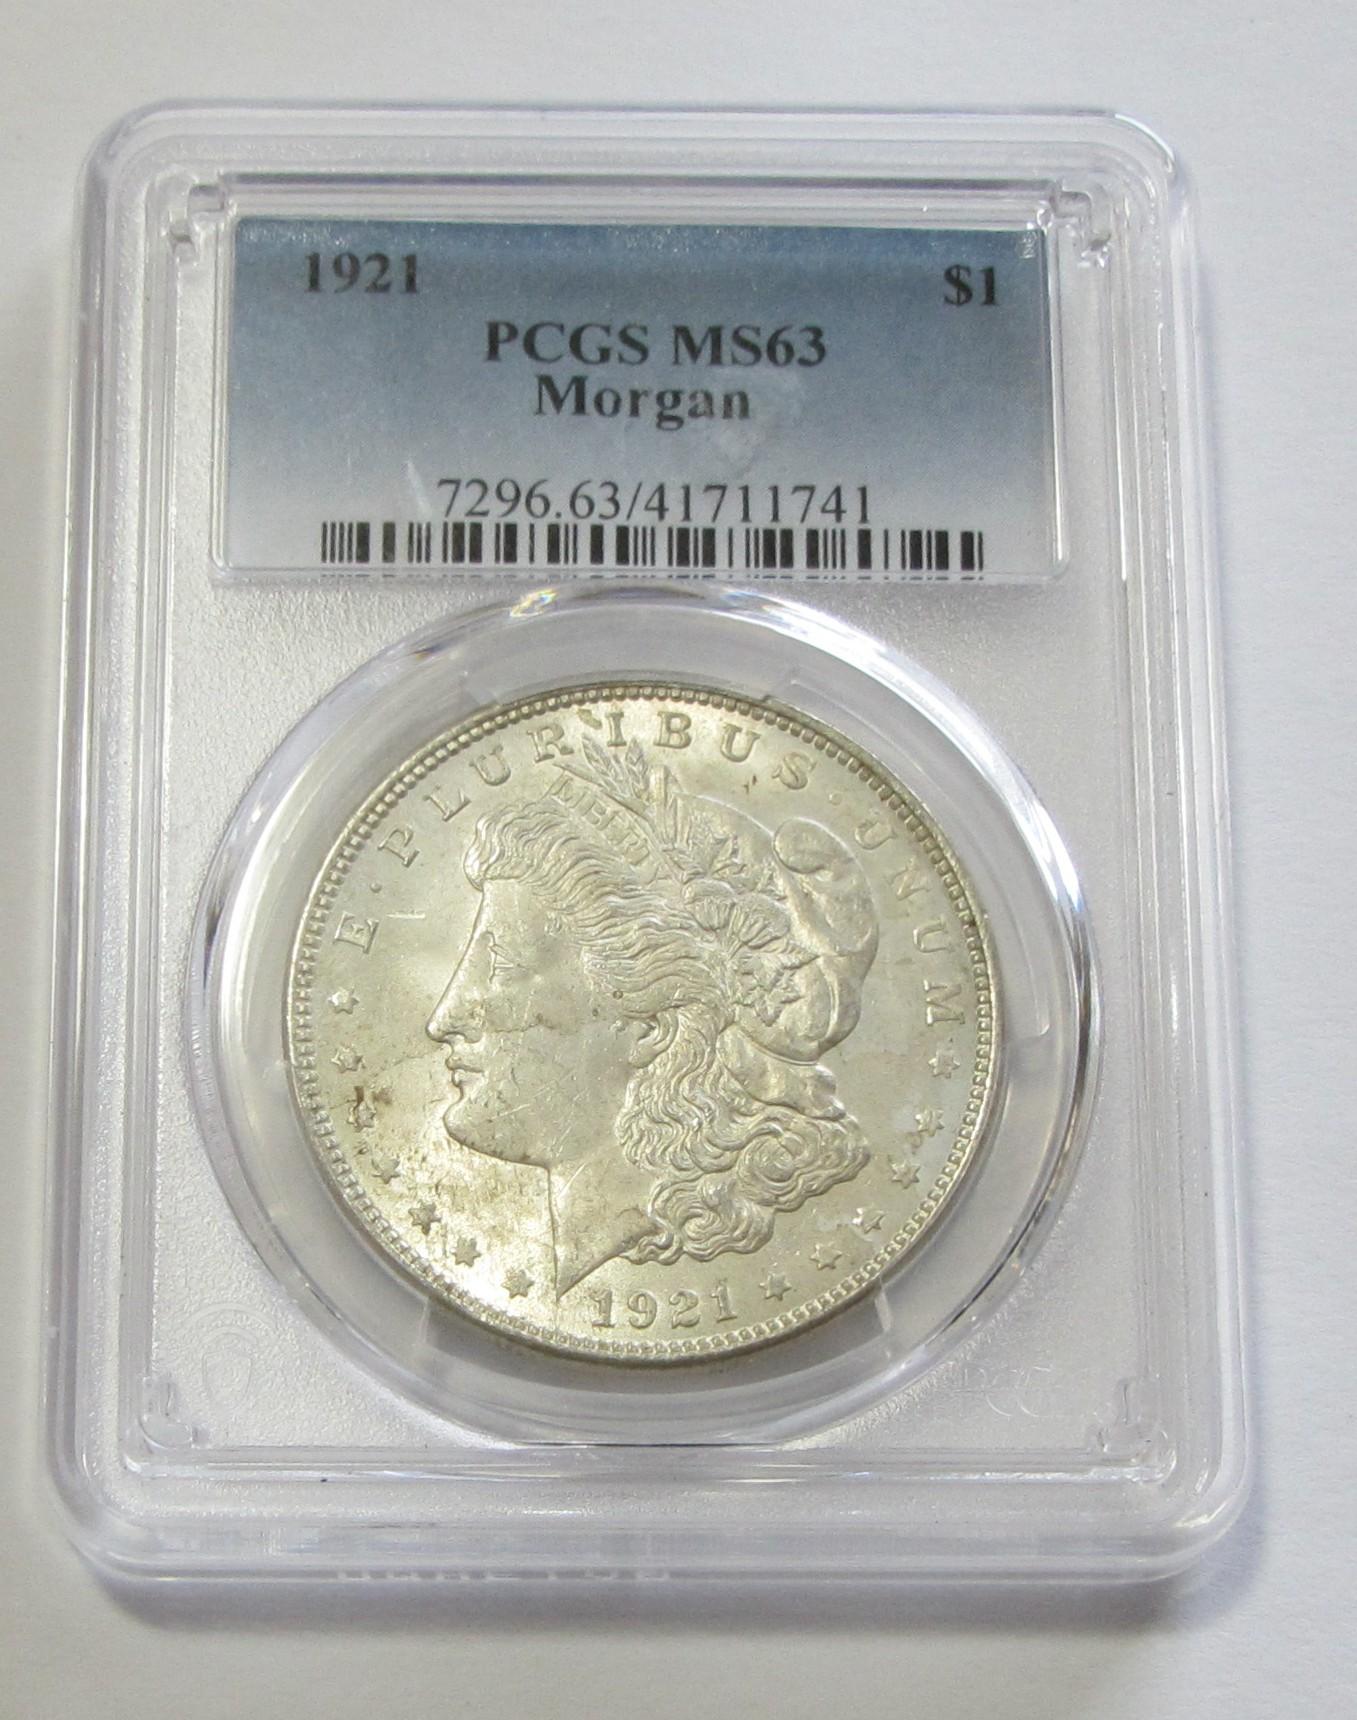 $1 1921 MORGAN PCGS MS 63